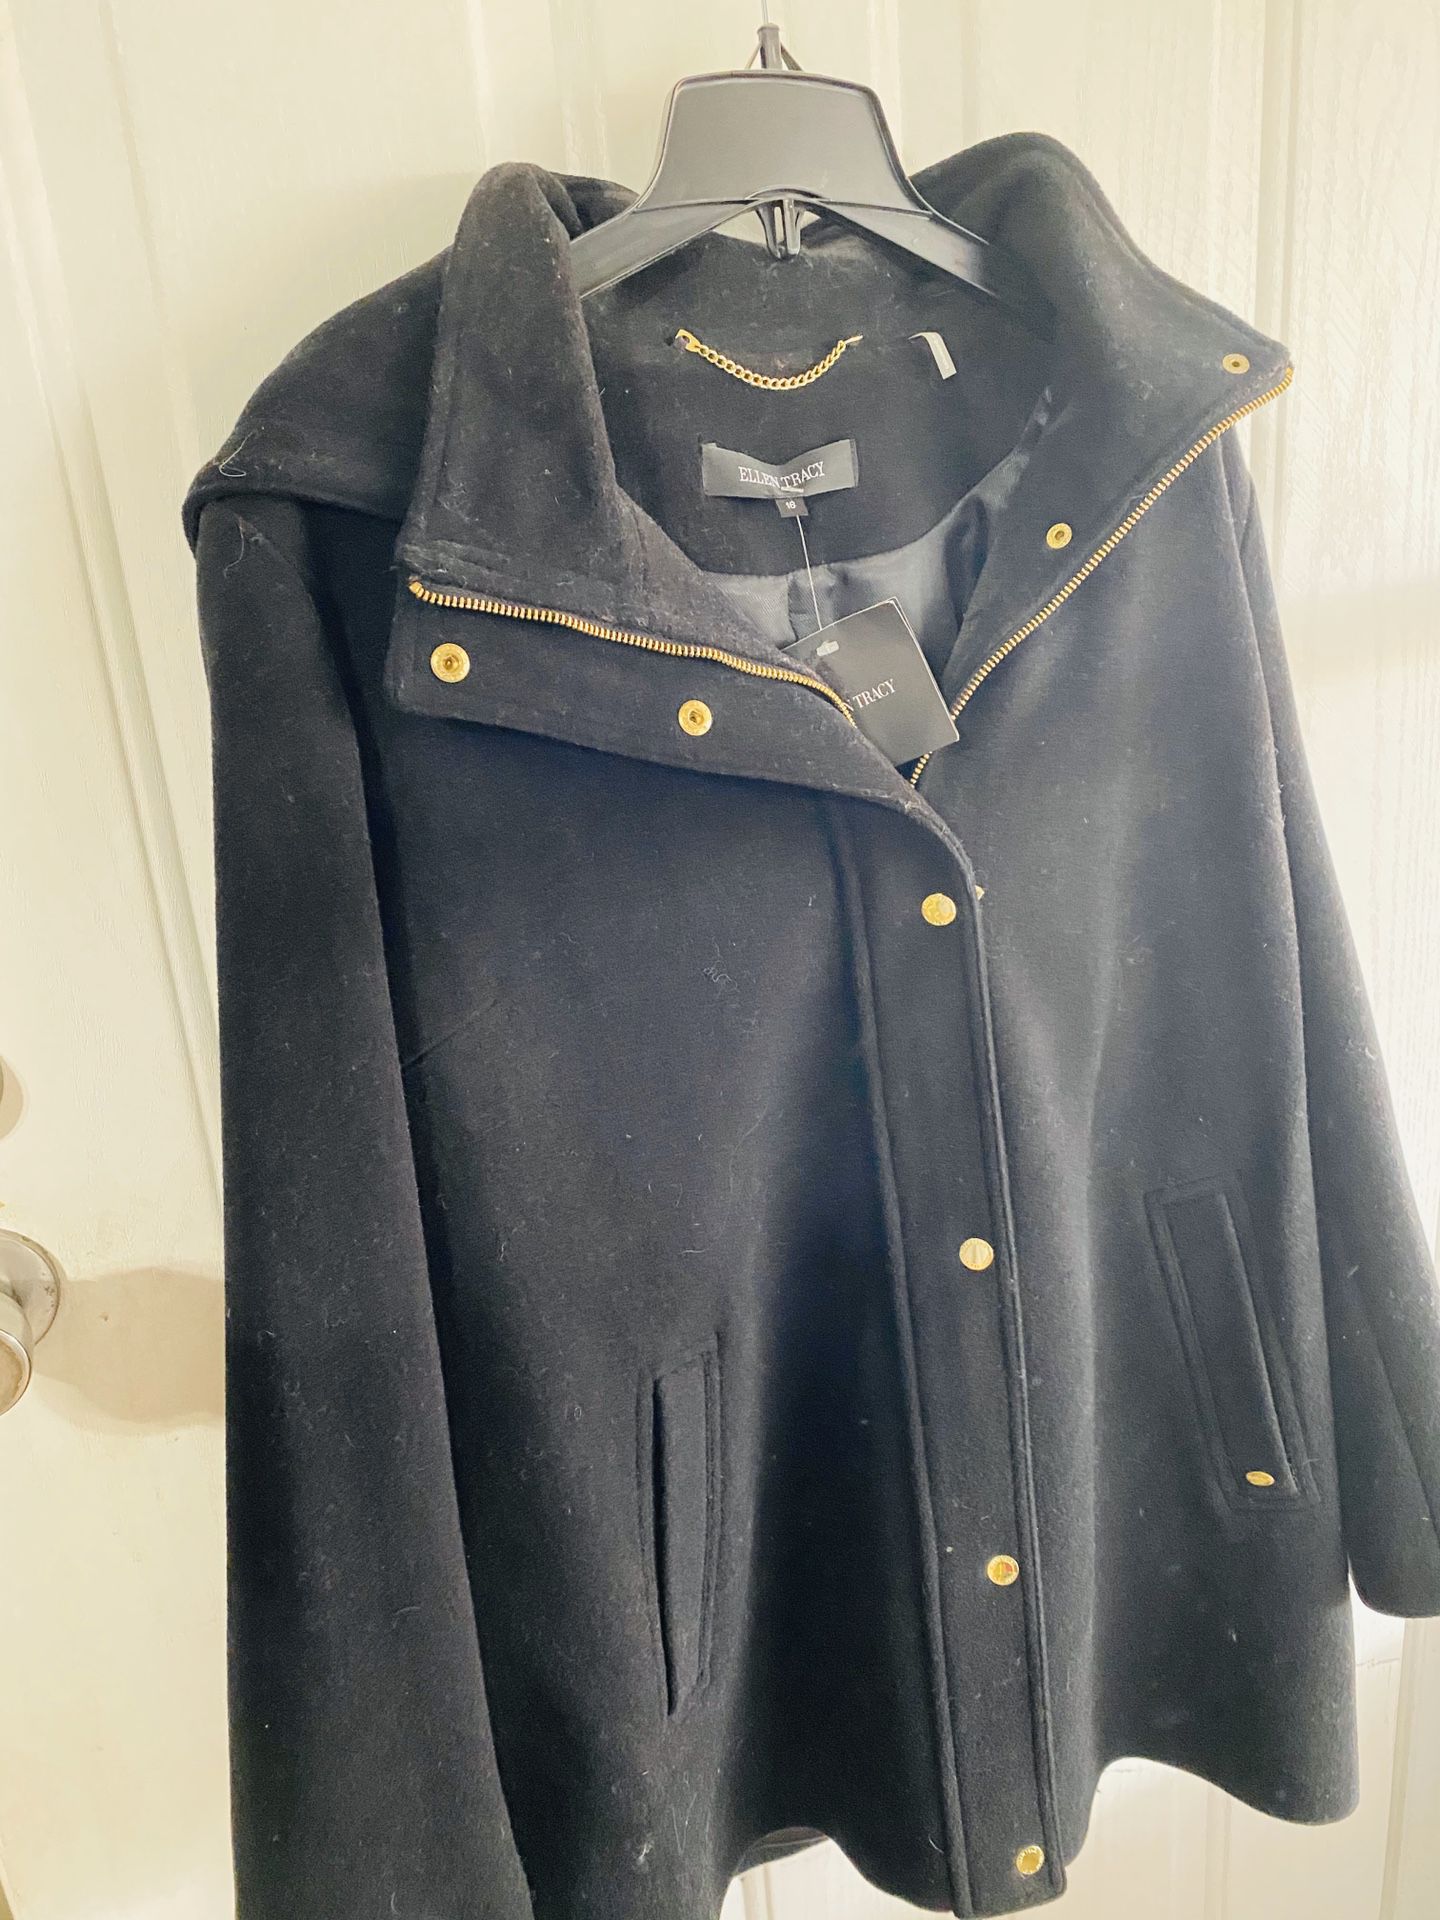 Coats or jackets